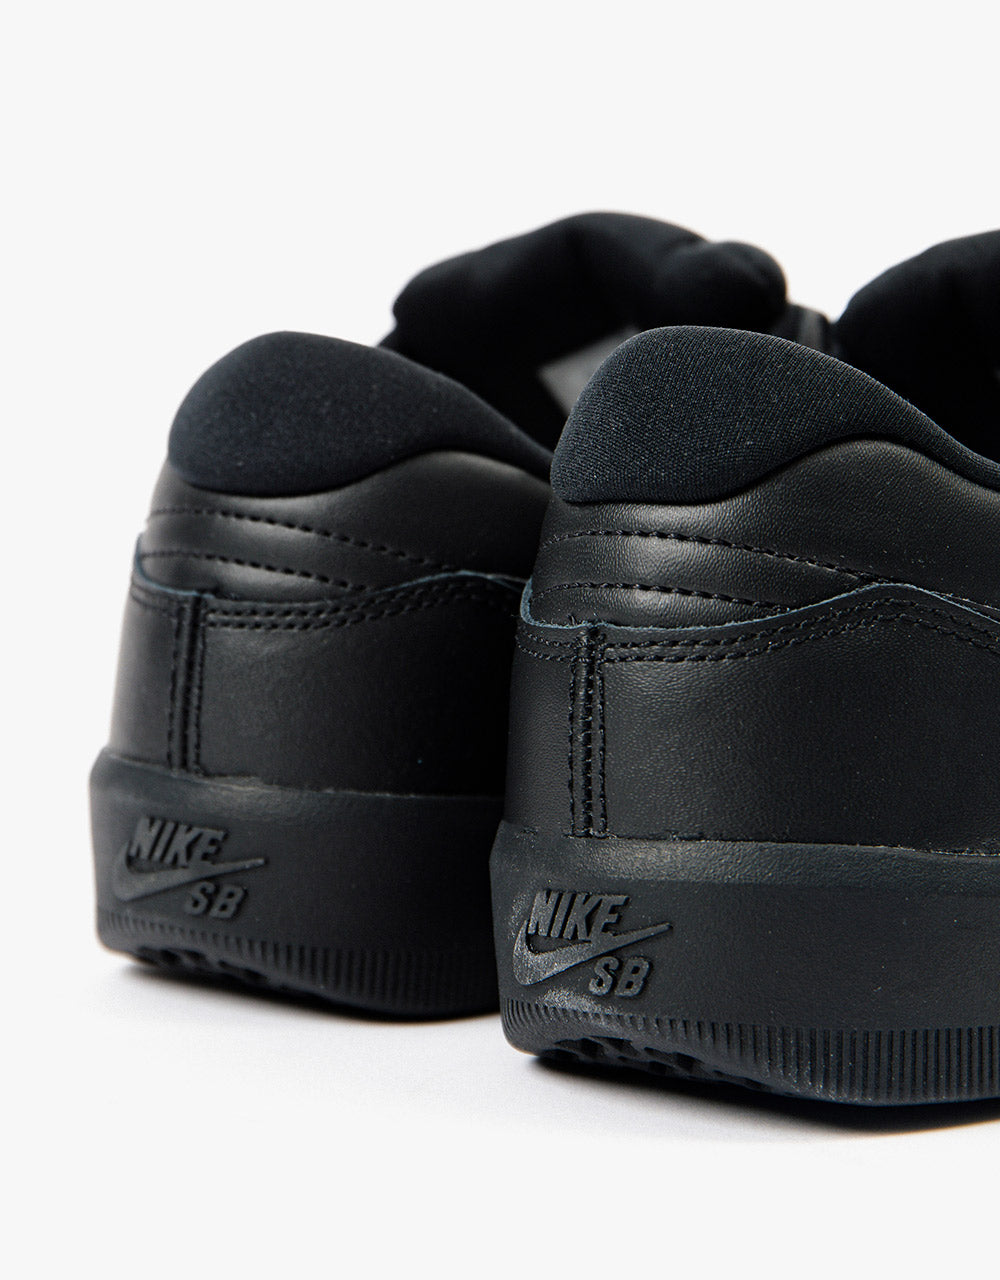 Nike SB Force 58 Premium Leather Skate Shoes - Black/Black-Black-Black –  Route One